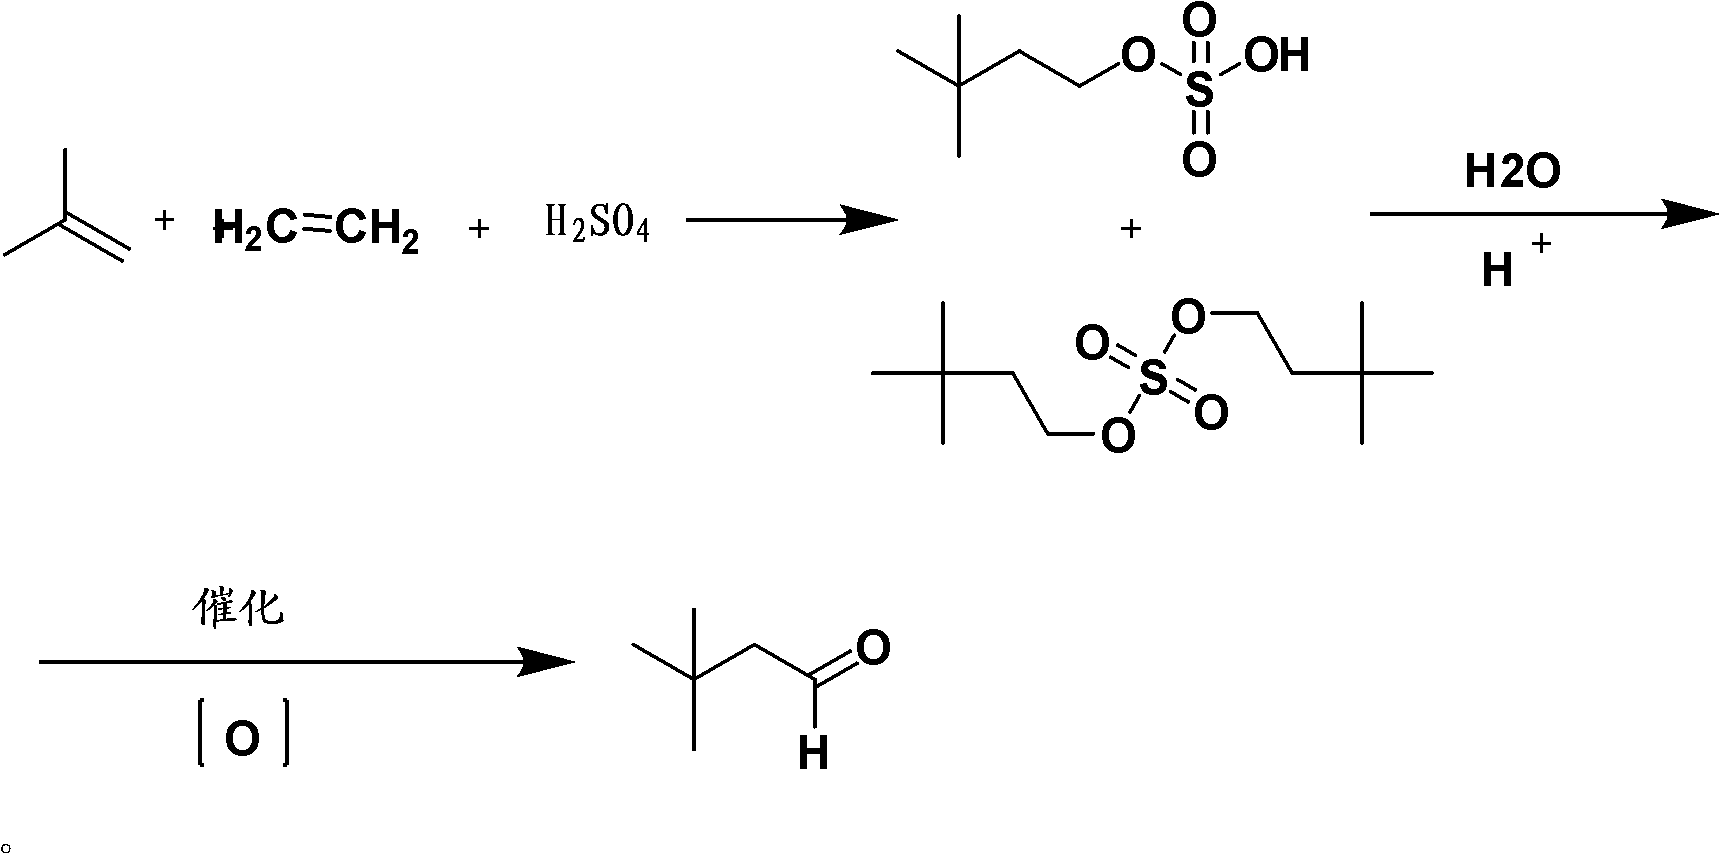 Method for preparing 3,3-dimethyl butyraldehyde